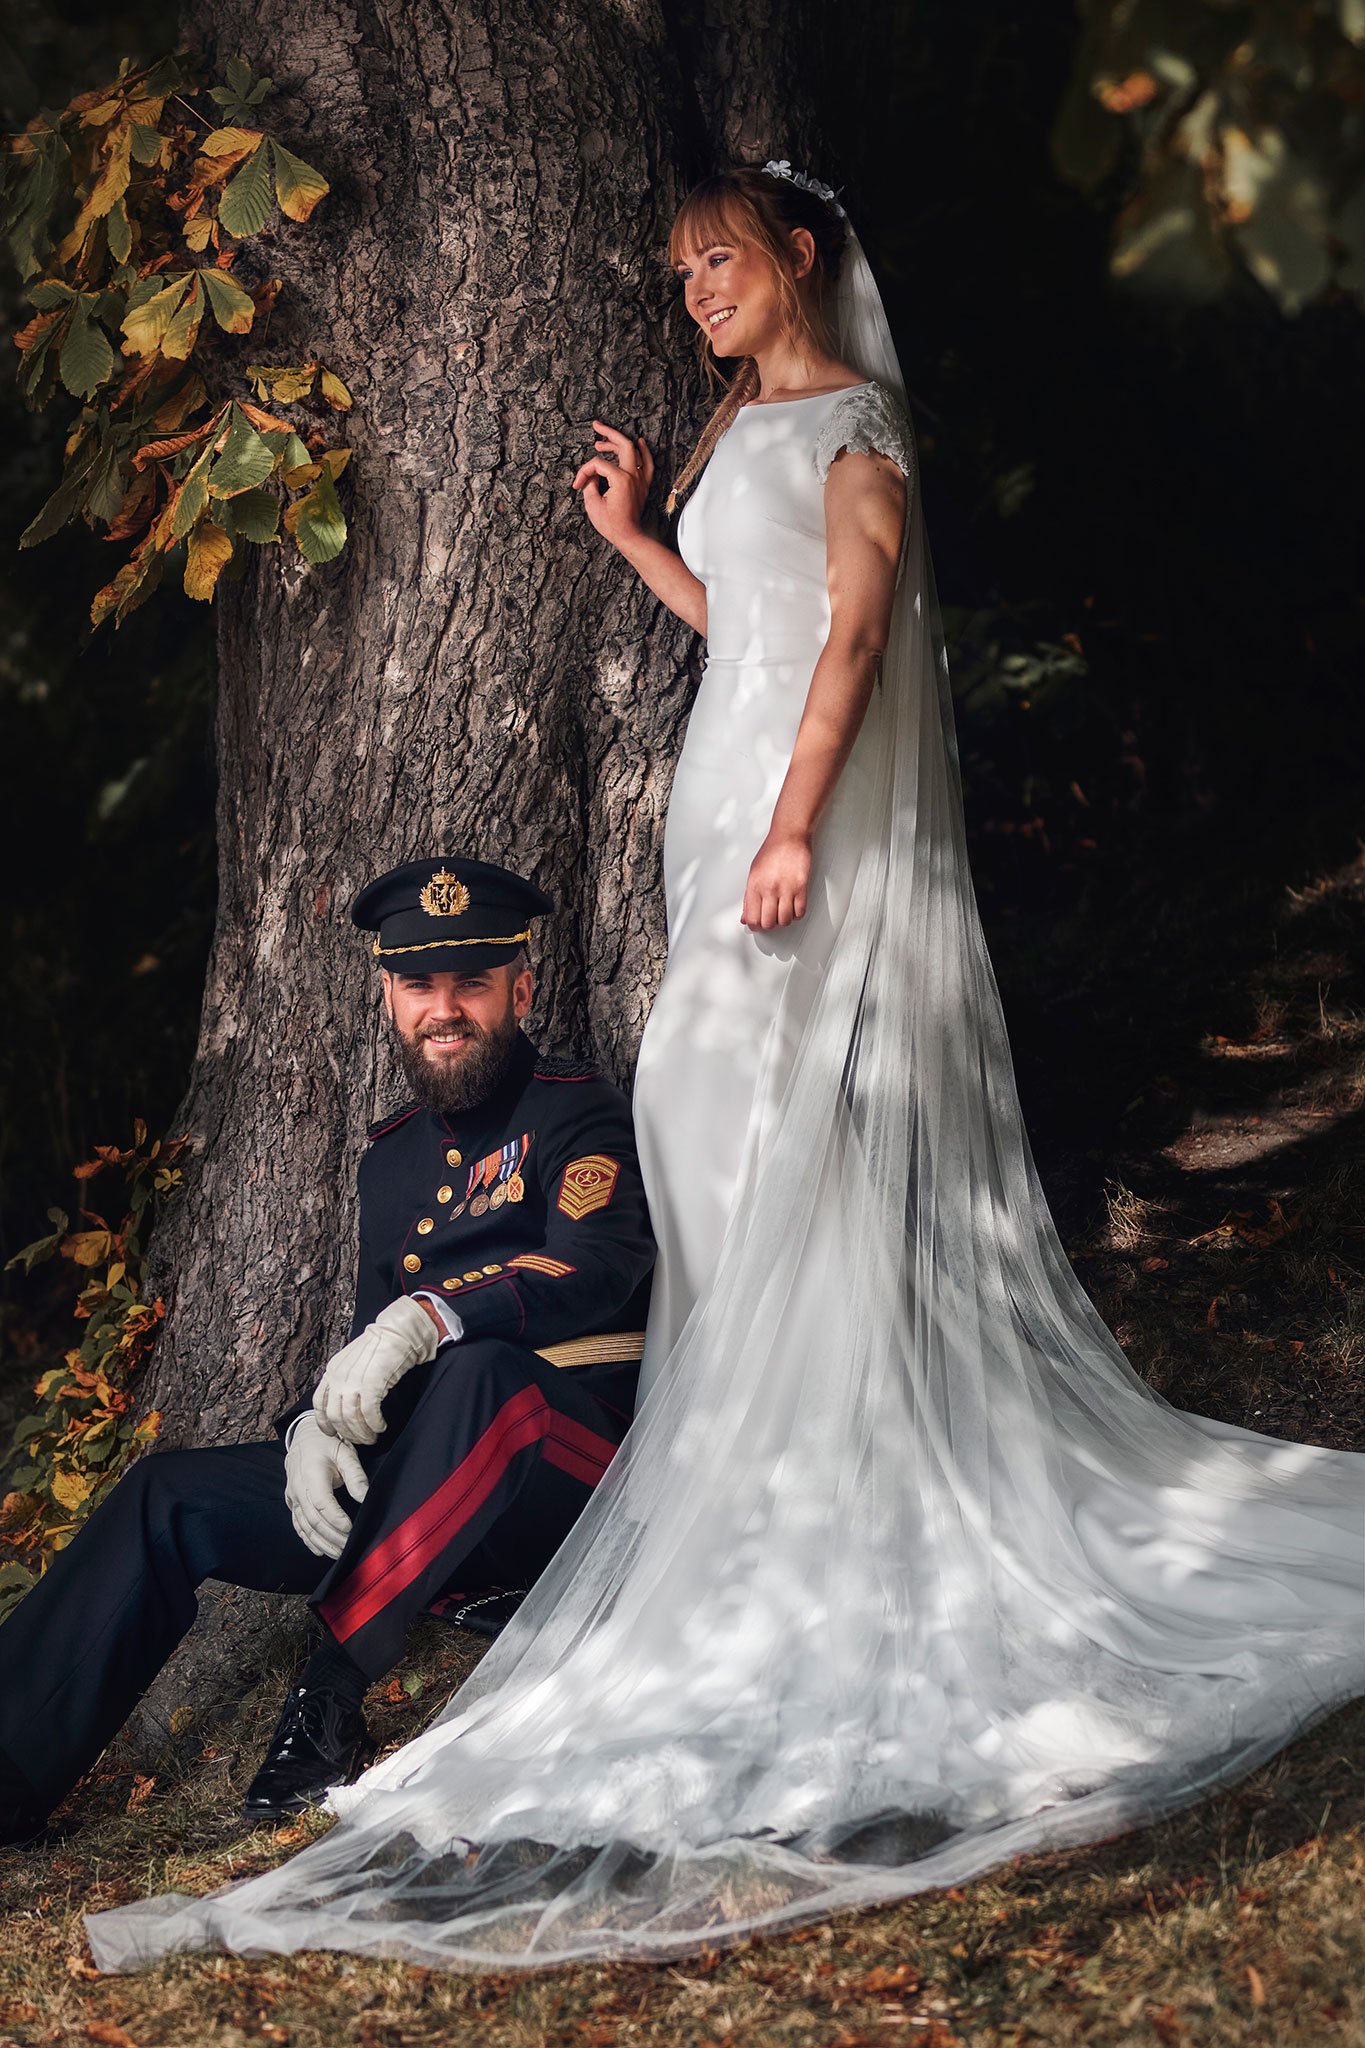 en smilende soldat i gallauniform poserer til bryllupsbilder sammen med bruden